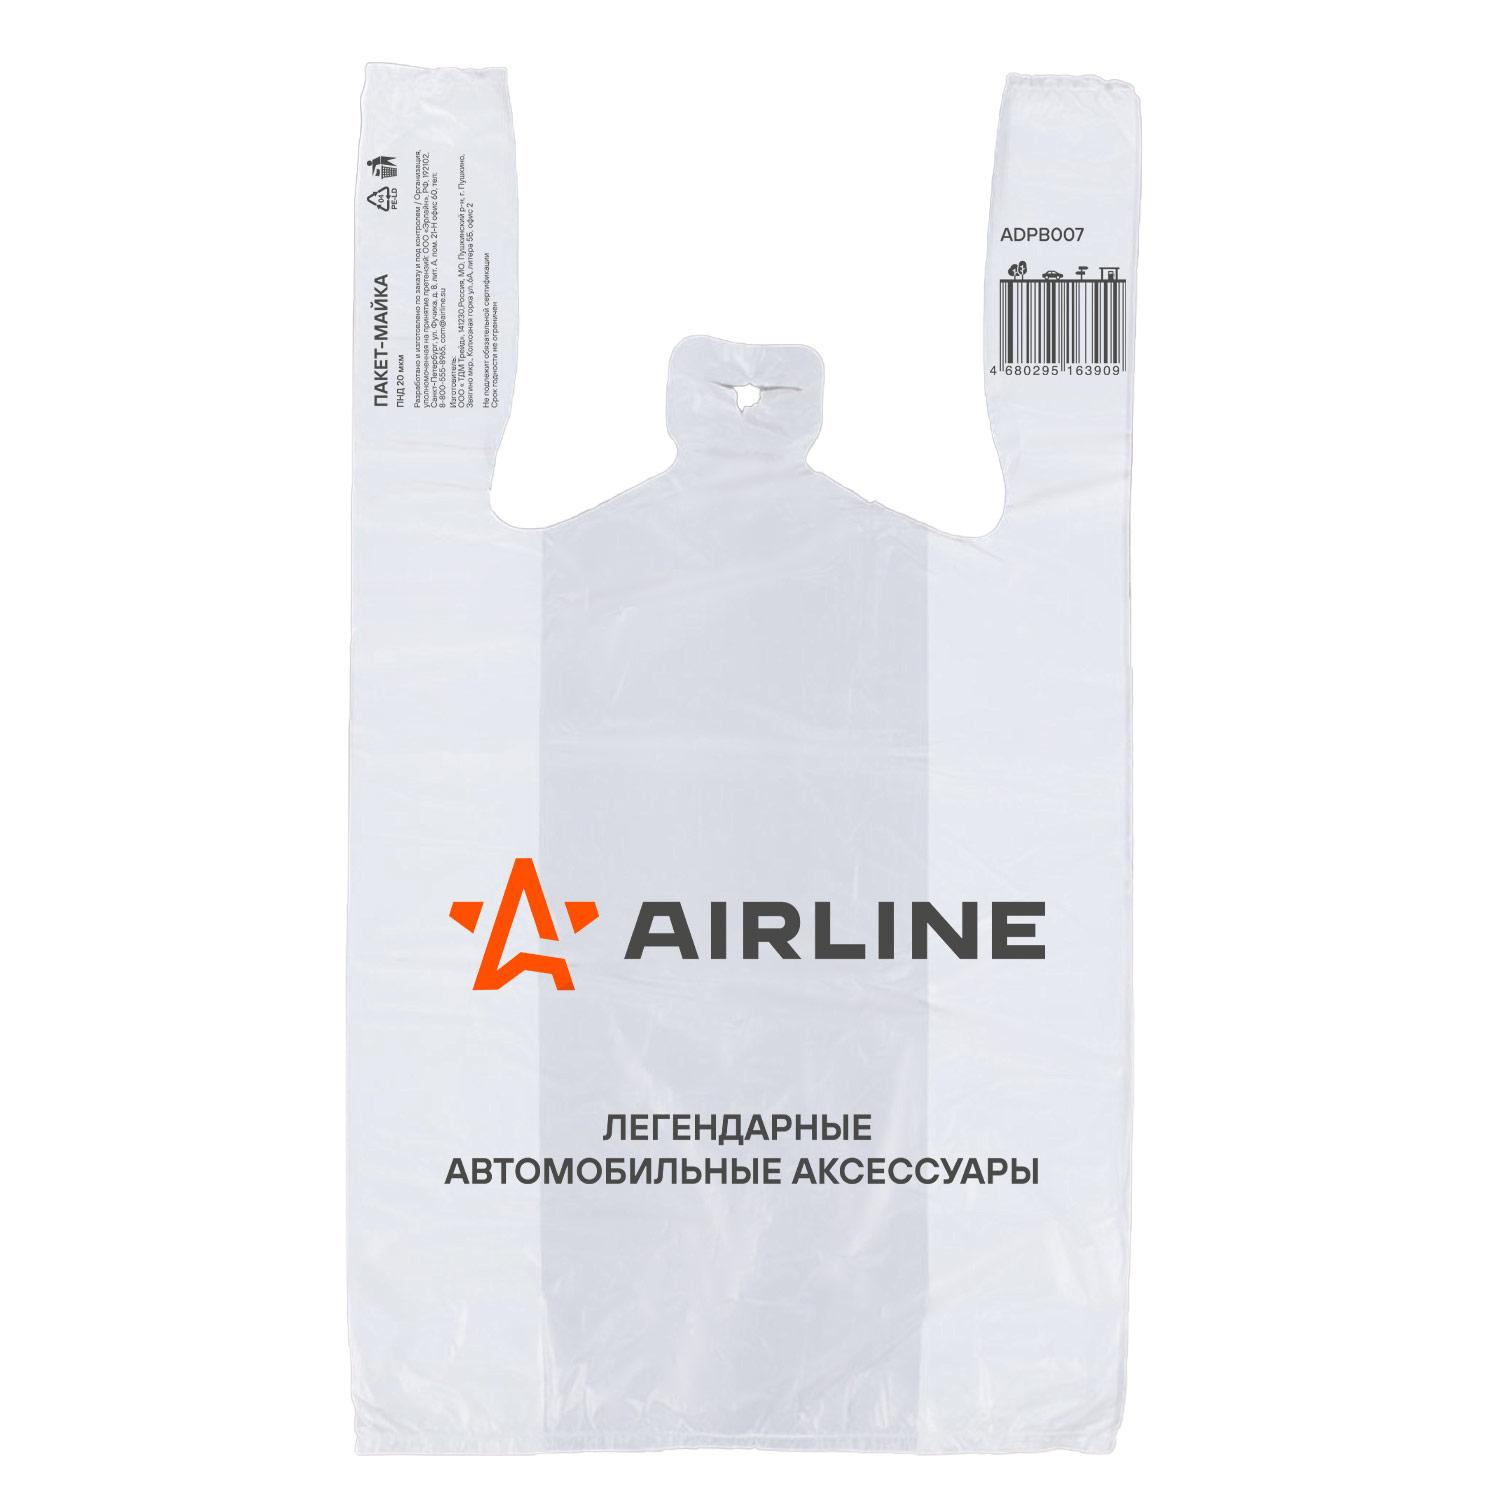 Пакет-майка фирменный airline, ПНД 20 мкм (40*60+20 см), белый - AIRLINE ADPB007